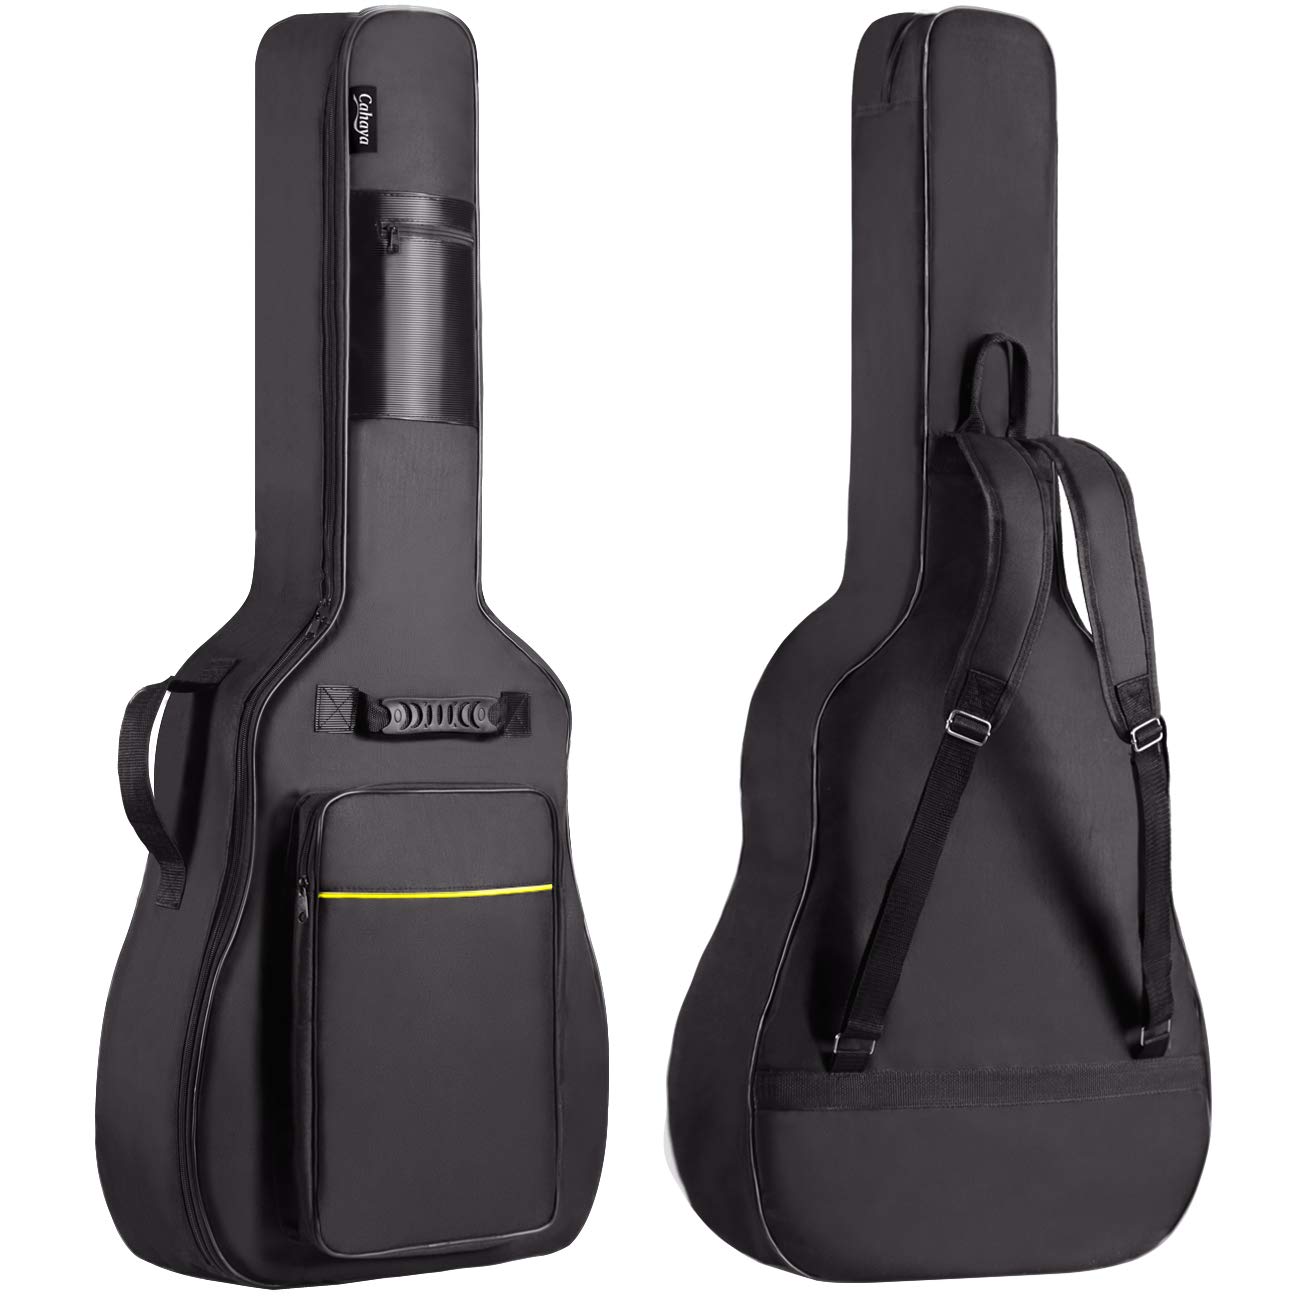 Book Cover CAHAYA 41 Inch Acoustic Guitar Bag 0.35 Inch Thick Padding Water Resistent Dual Adjustable Shoulder Strap Guitar Case Gig Bag with Back Hanger Loop, Black CY0152